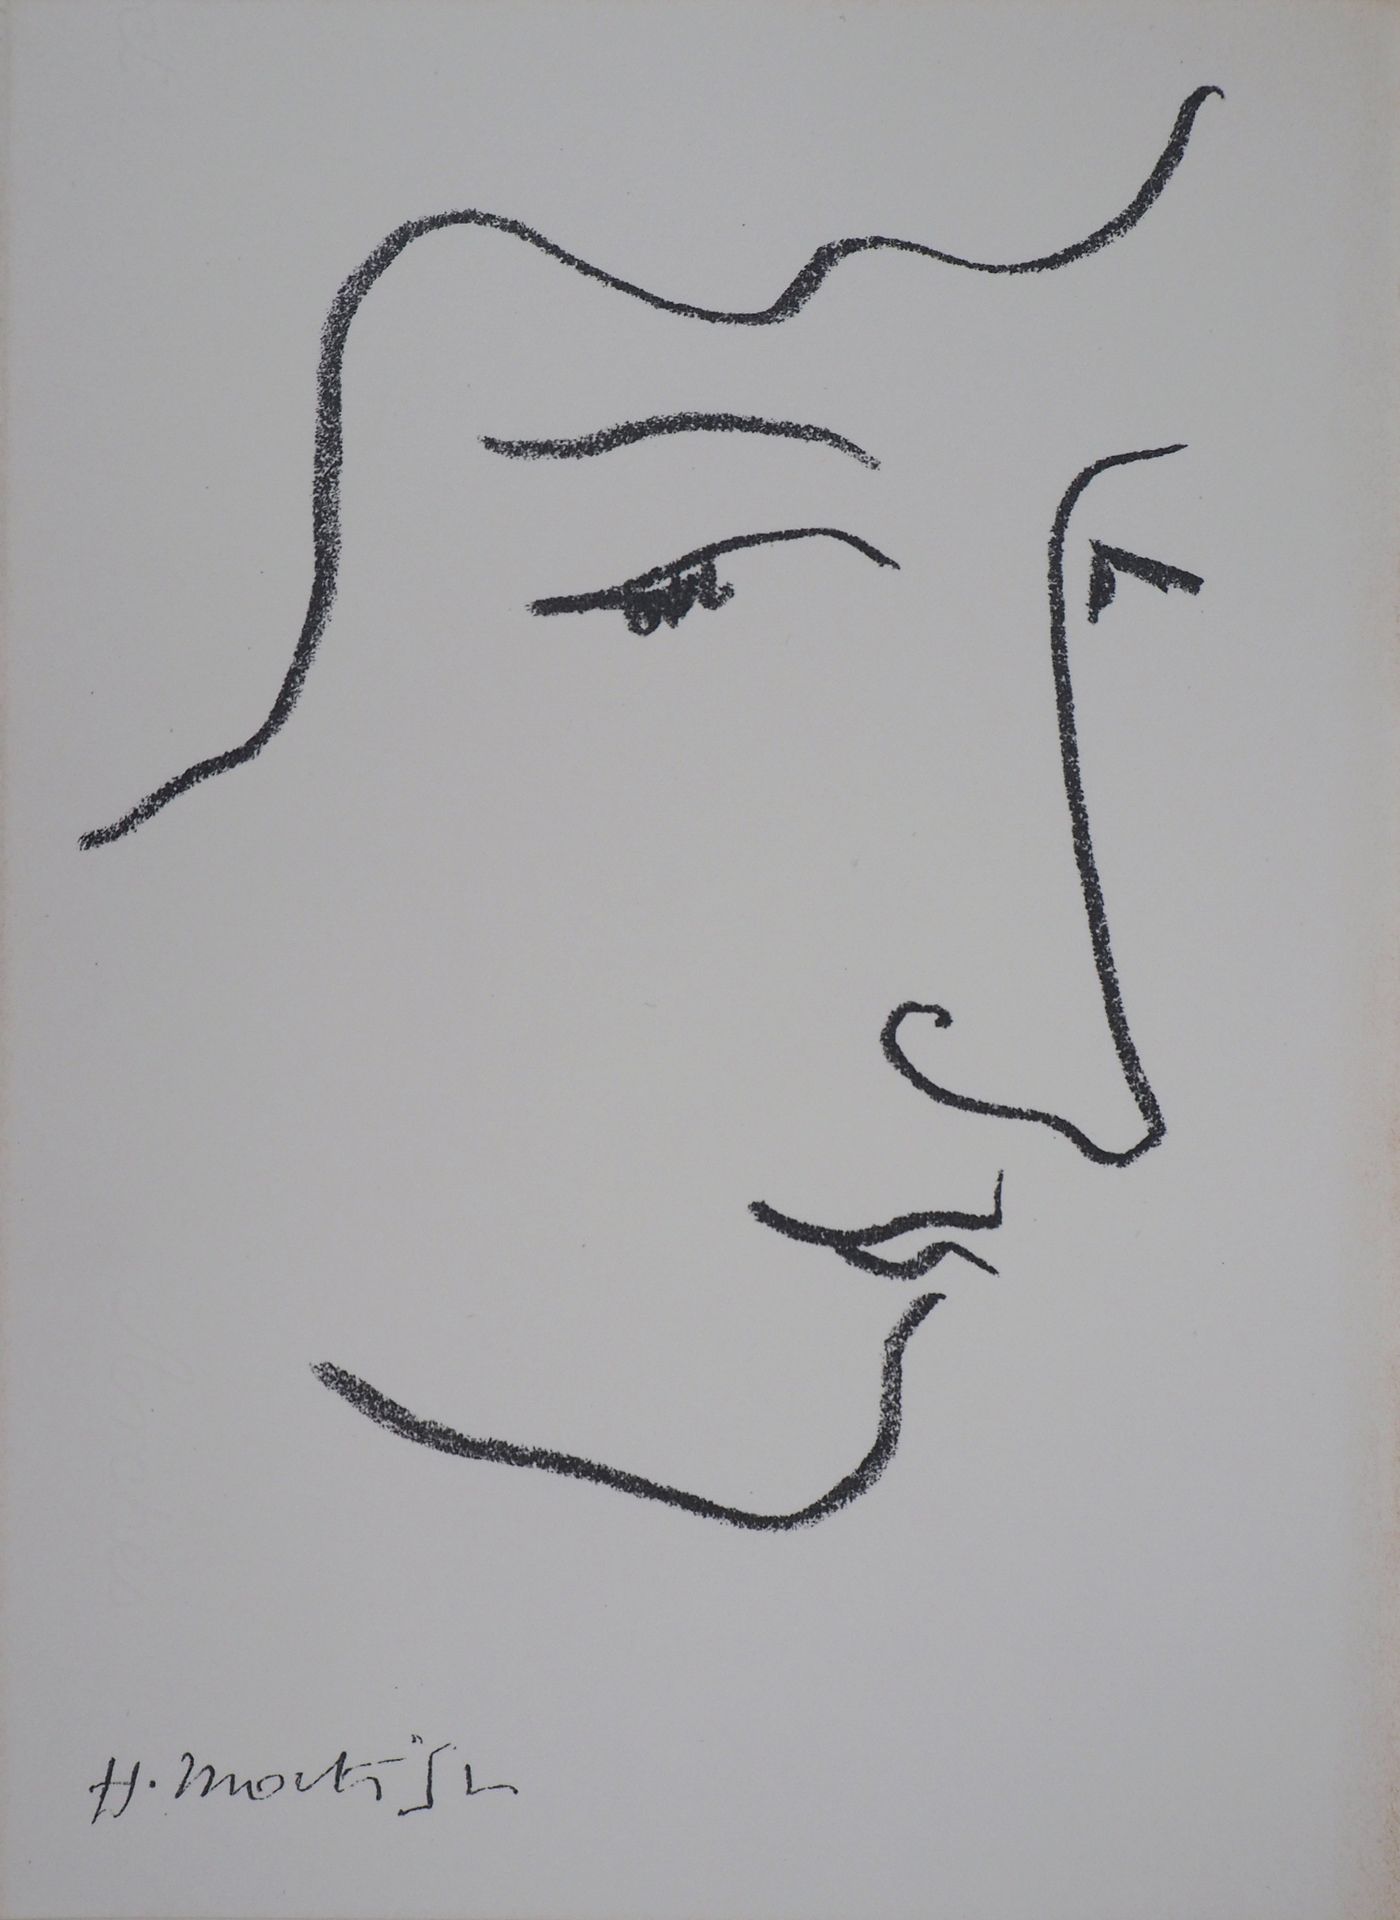 Henri MATISSE Henri MATISSE (1869-1954)

Portrait de profil

Lithographie origin&hellip;